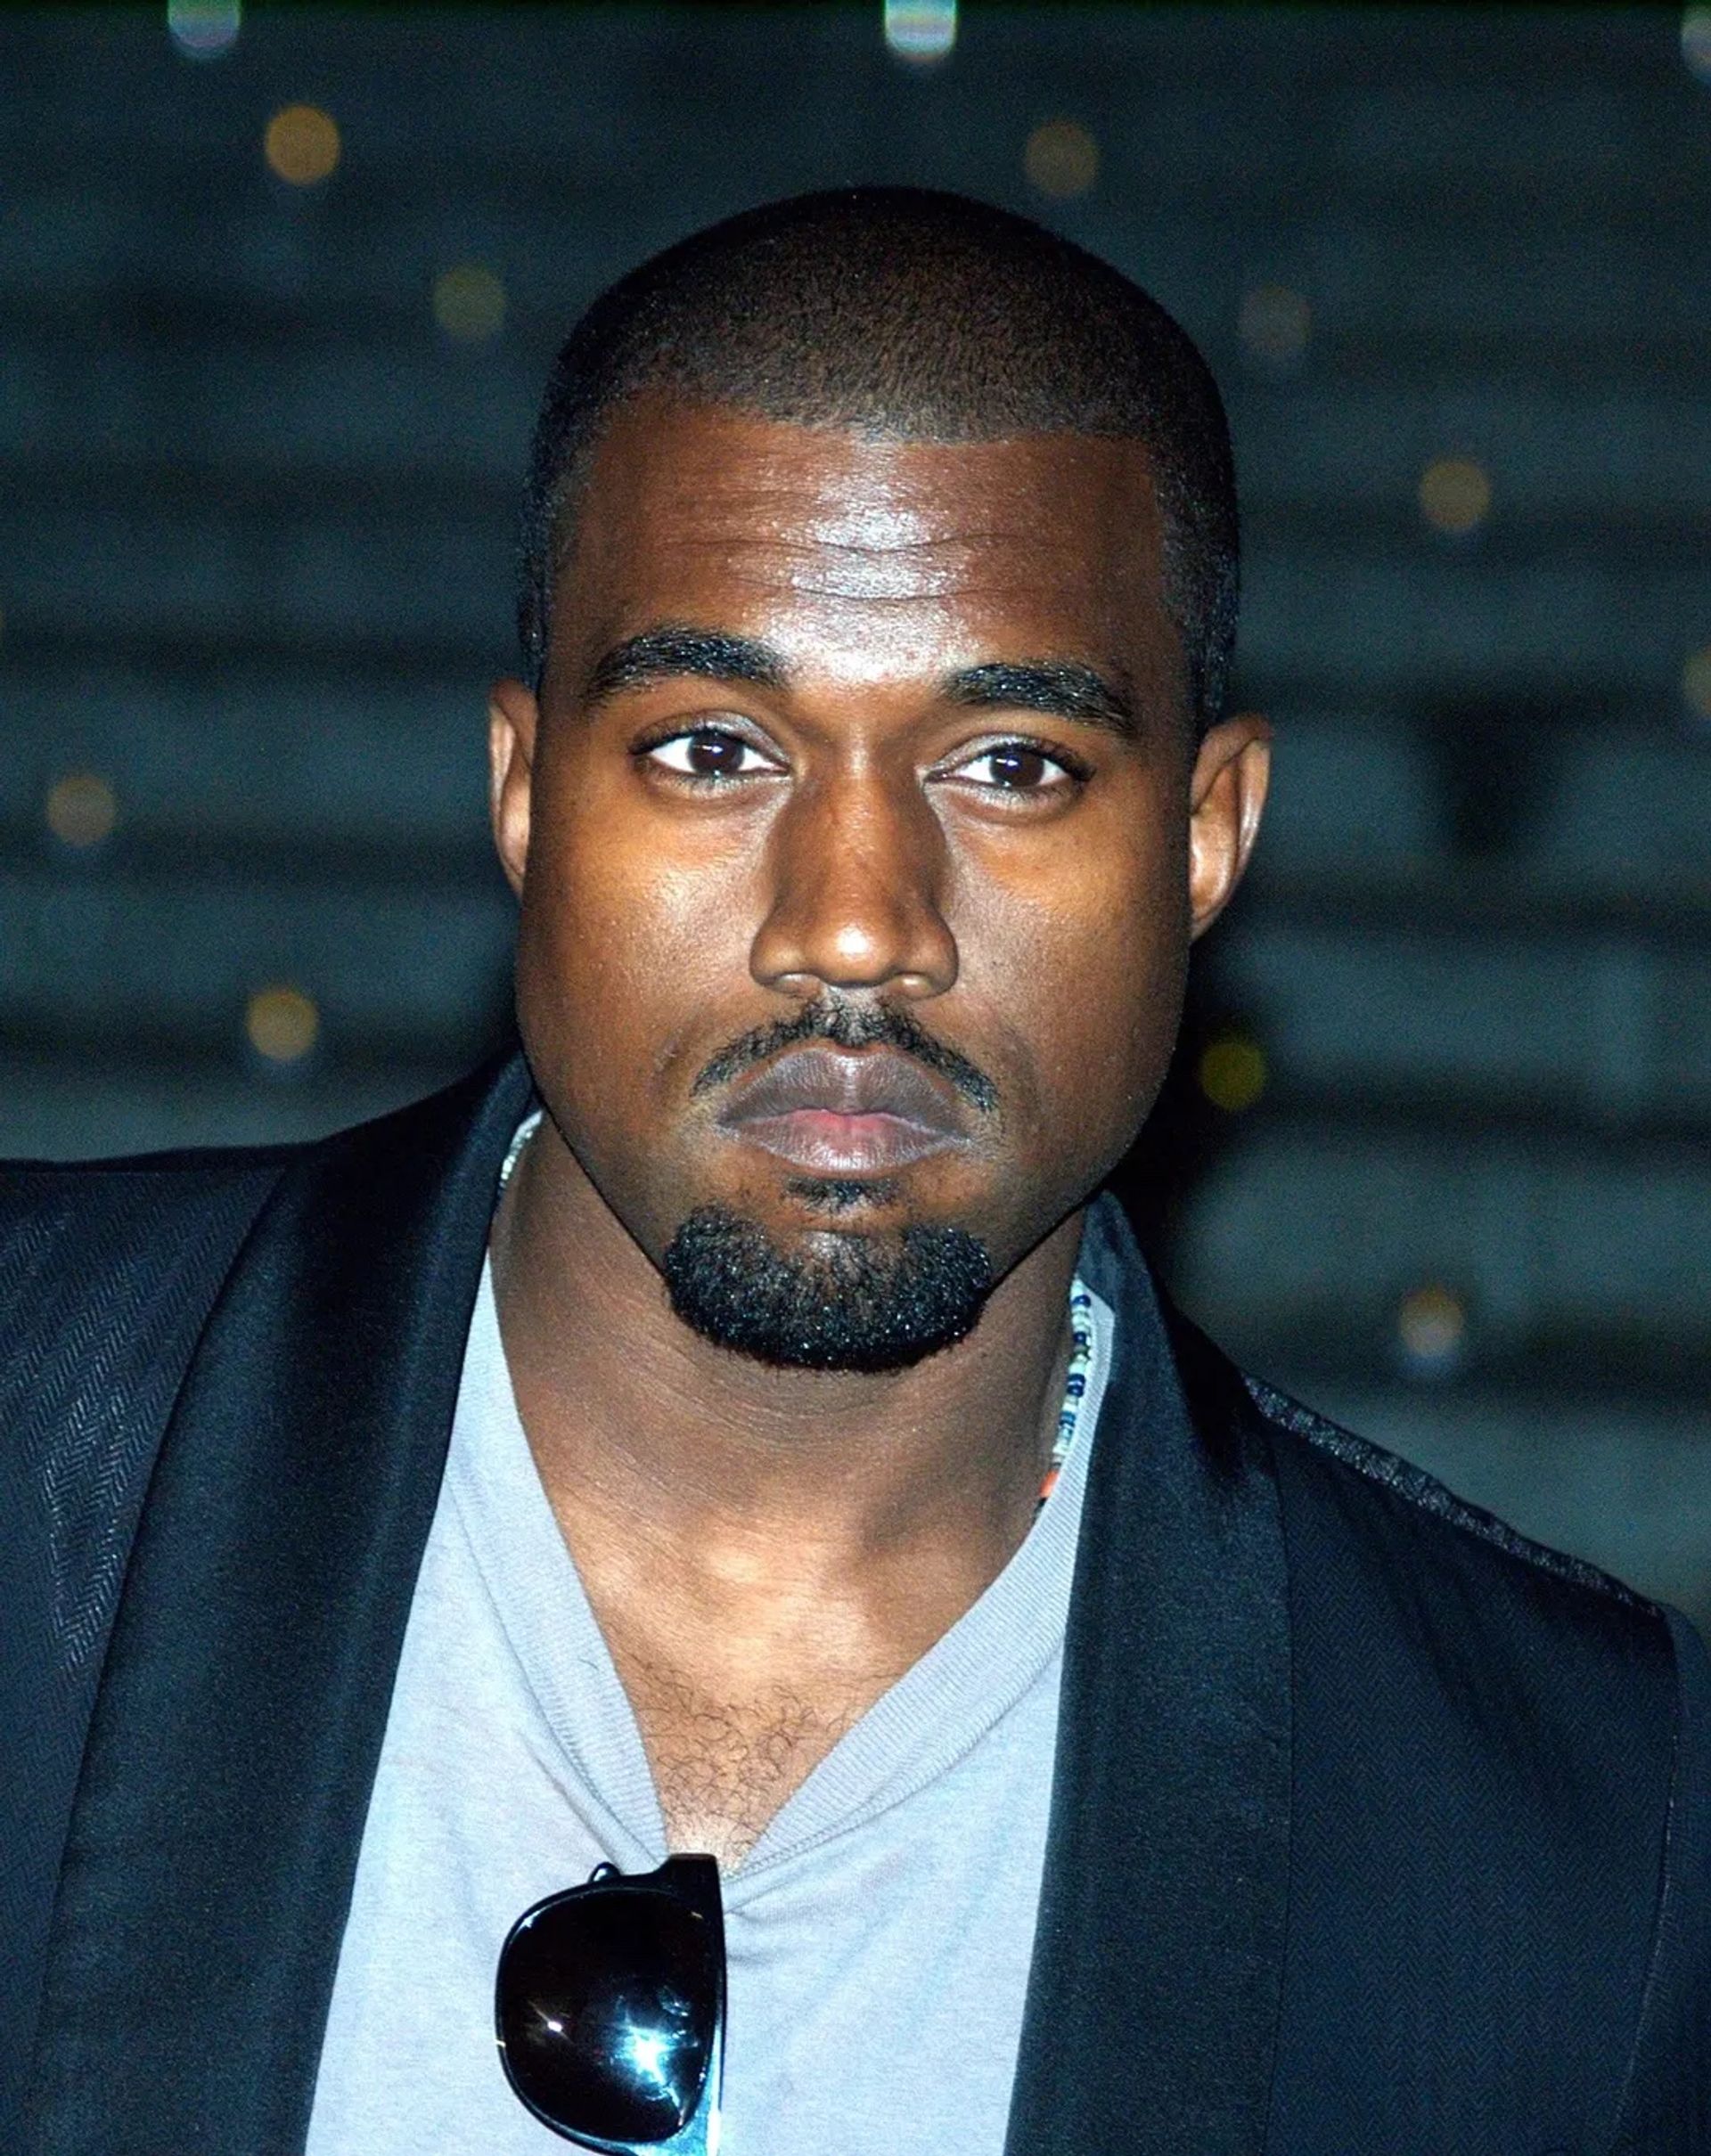 Kanye West Courtesy David Shankbone, via Wikimedia Commons